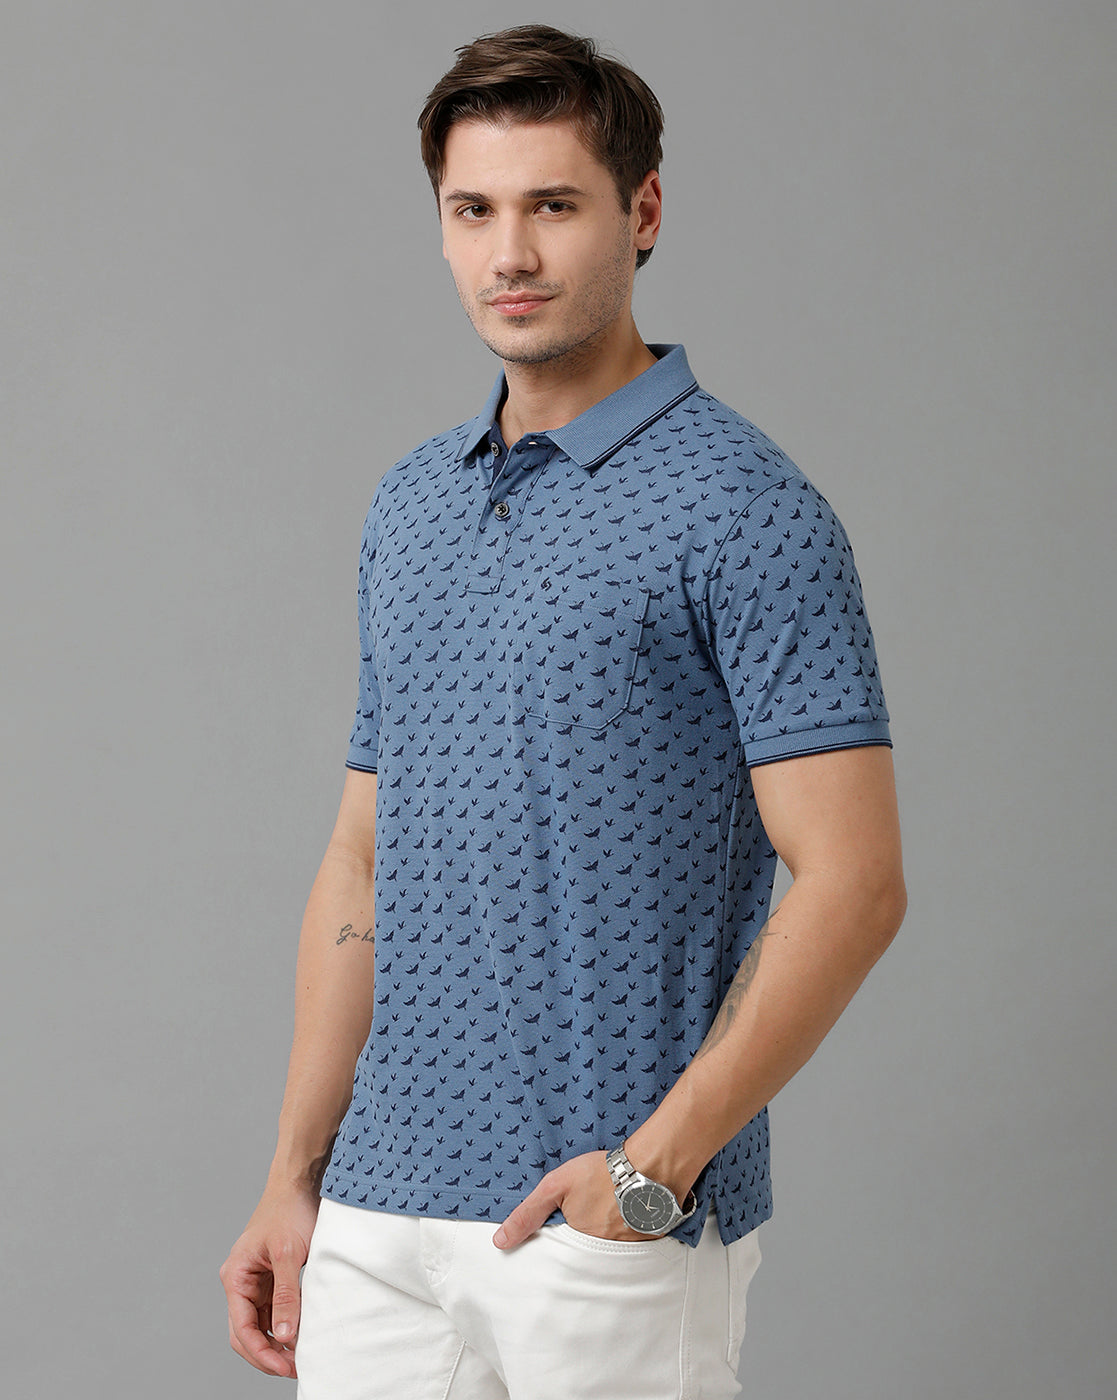 Classic Polo Men's Cotton Half Sleeve Printed Slim Fit Polo Neck Blue Color T-Shirt | Beau - 200 A